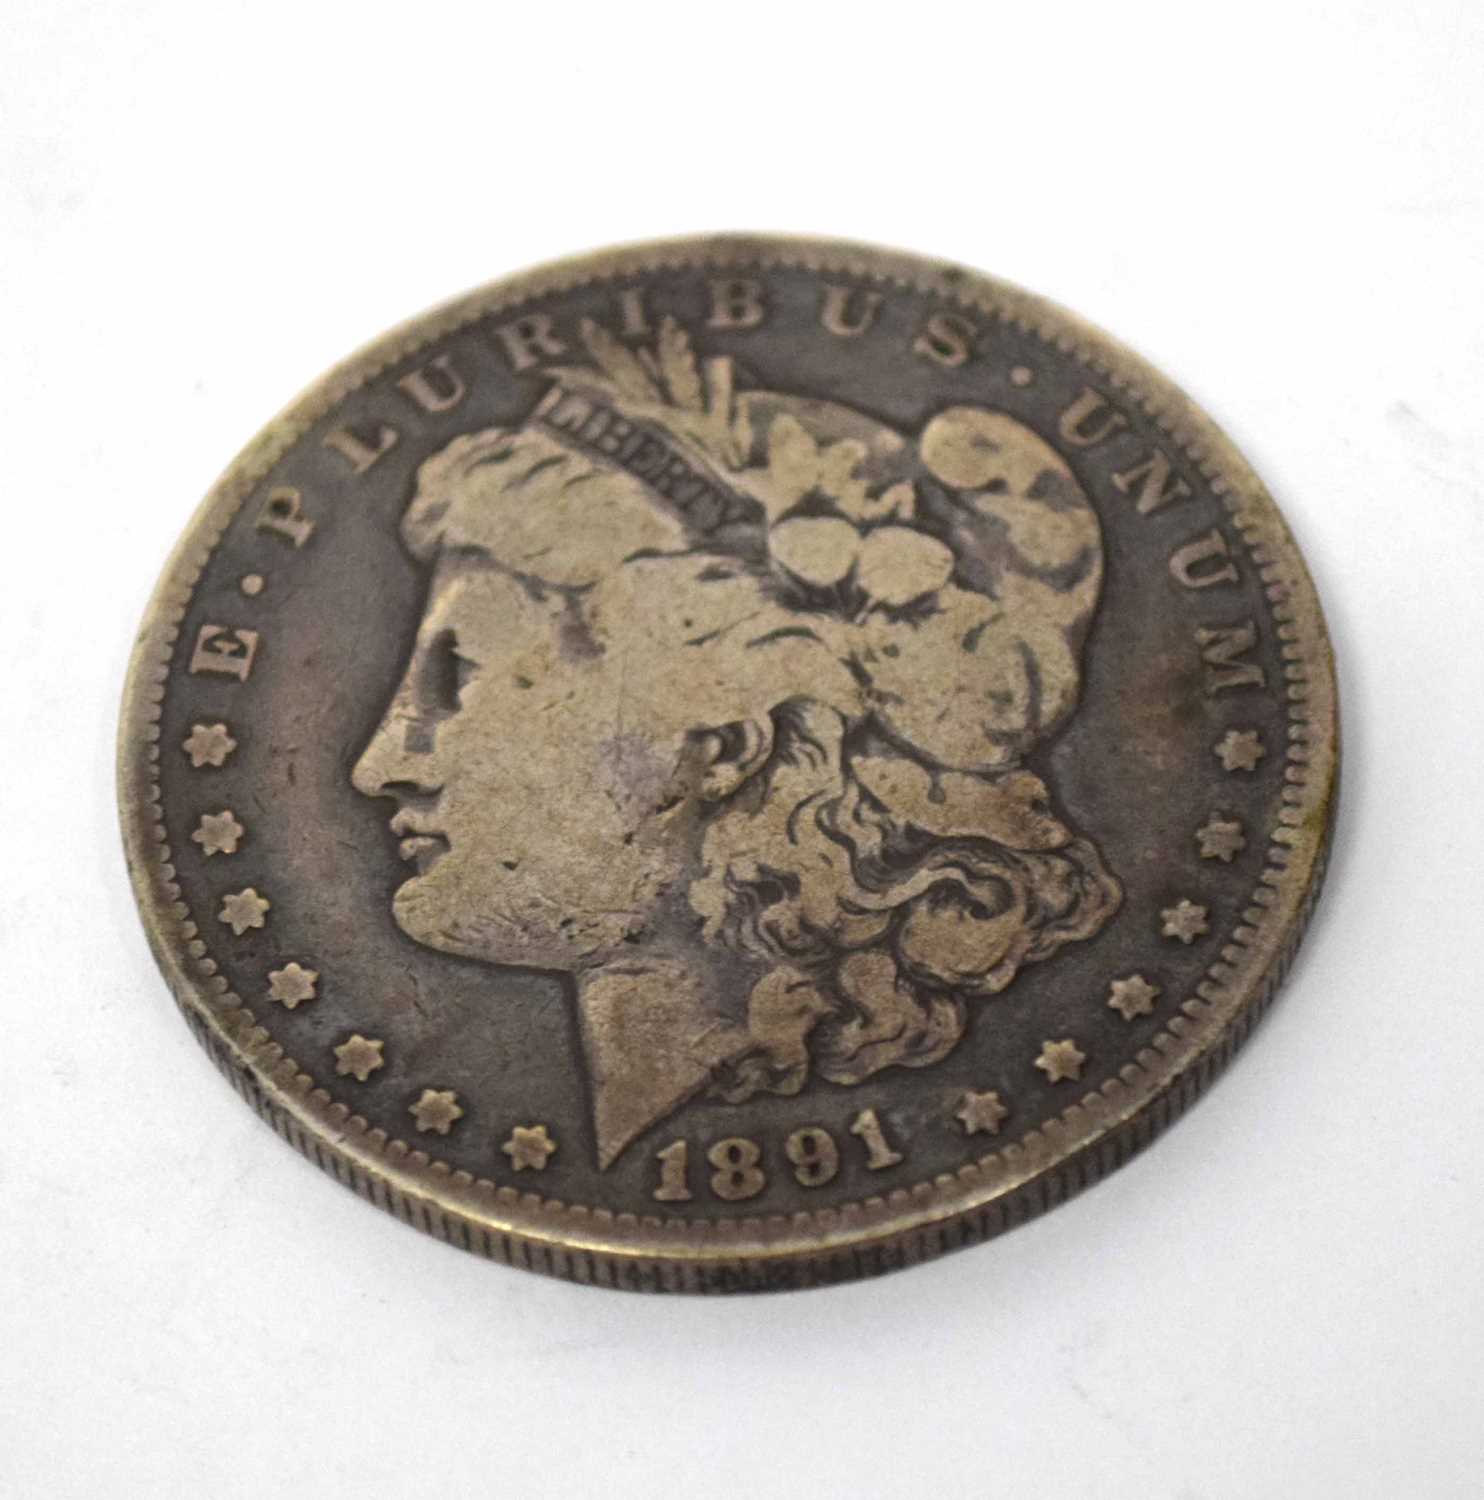 Lot 147 - 1891 USA silver $1 piece